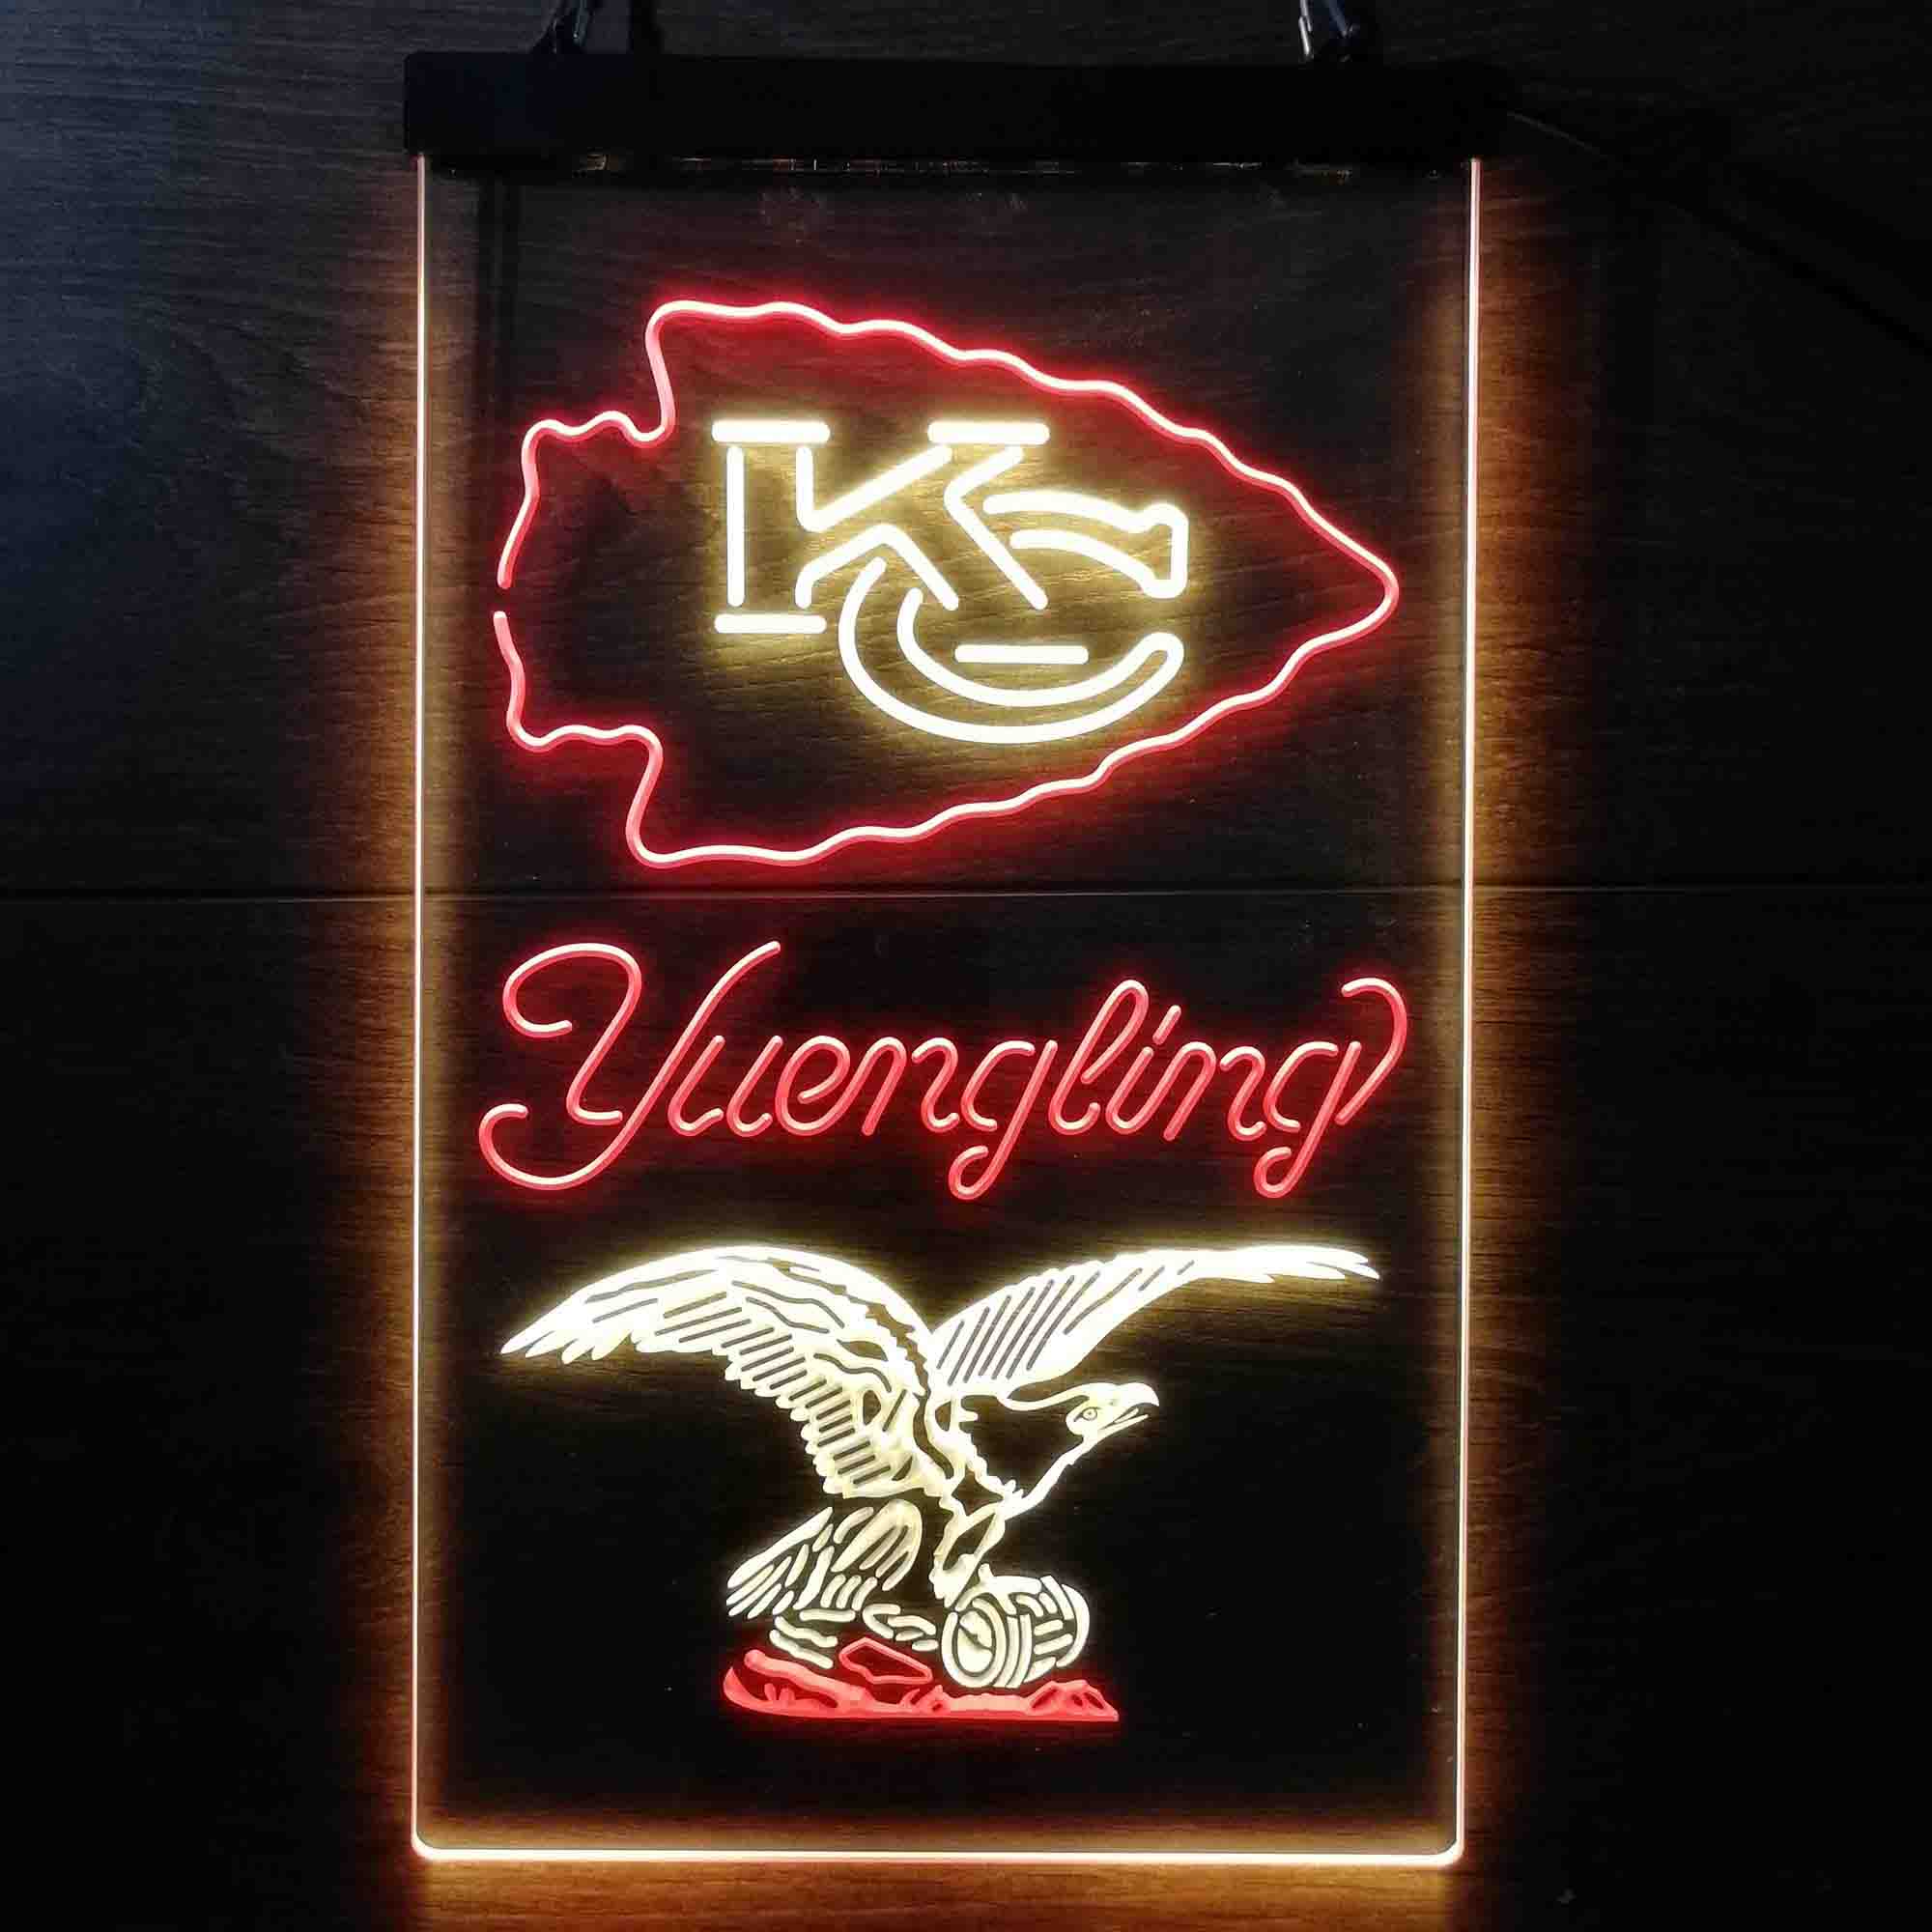 Yuengling Bar Kansas City Chiefs Est. 1960 Neon-Like LED Sign